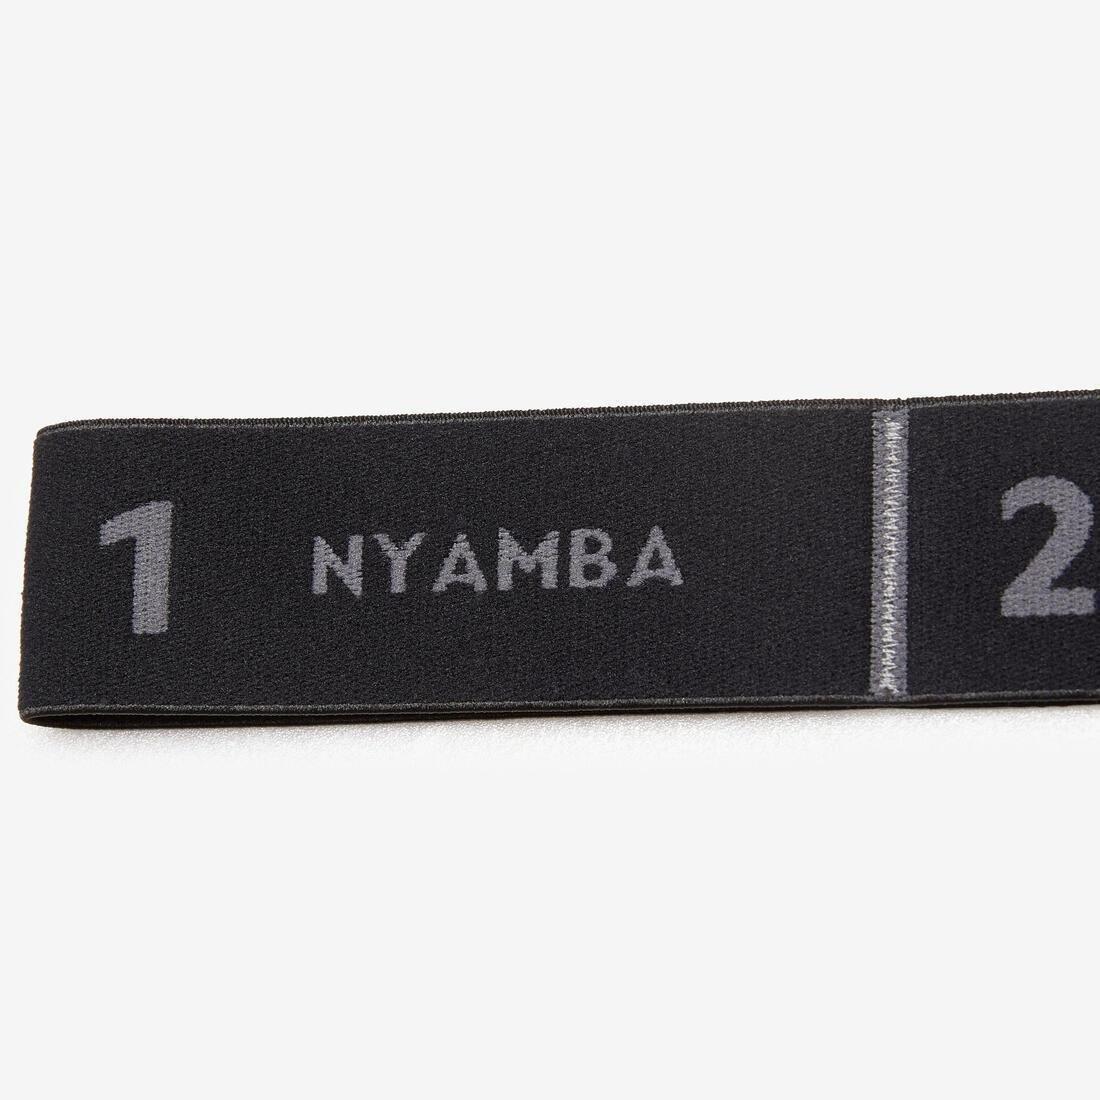 NYAMBA - Fabric Fitness Resistance Band 15 kg - Black